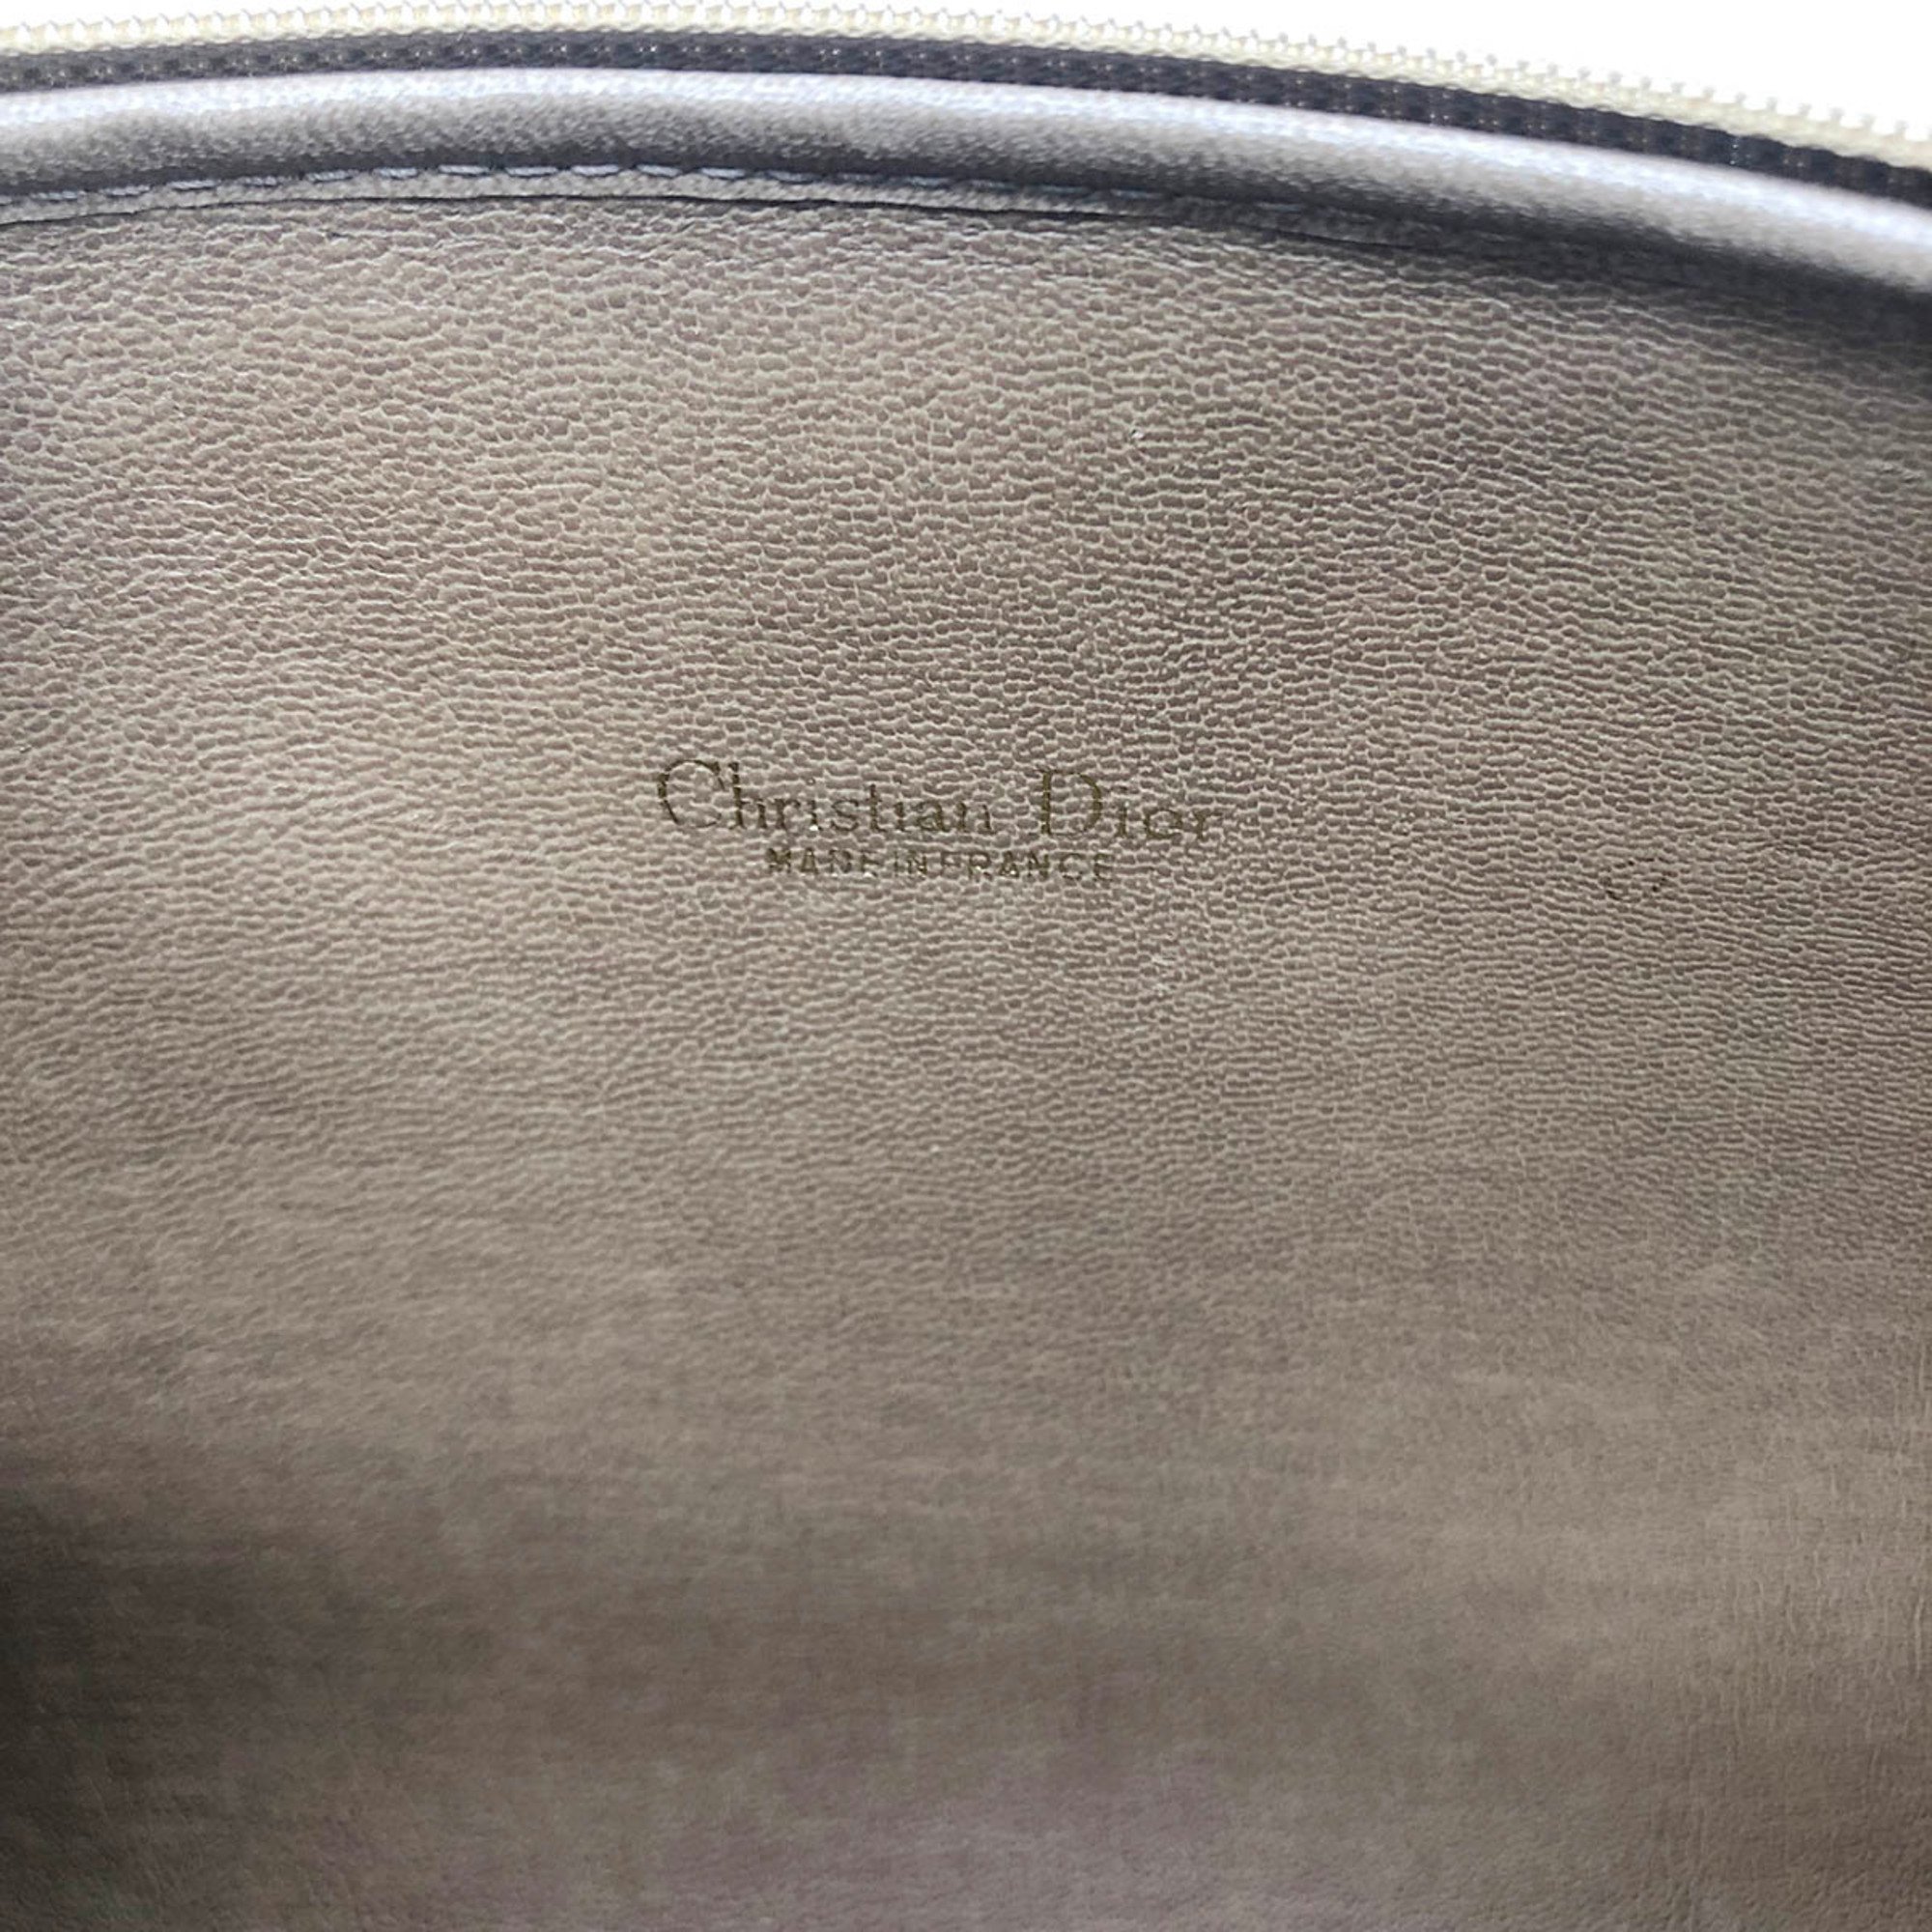 Christian Dior Honeycomb Clutch Bag Pouch Second Beige Brown Ladies Fashion PVC